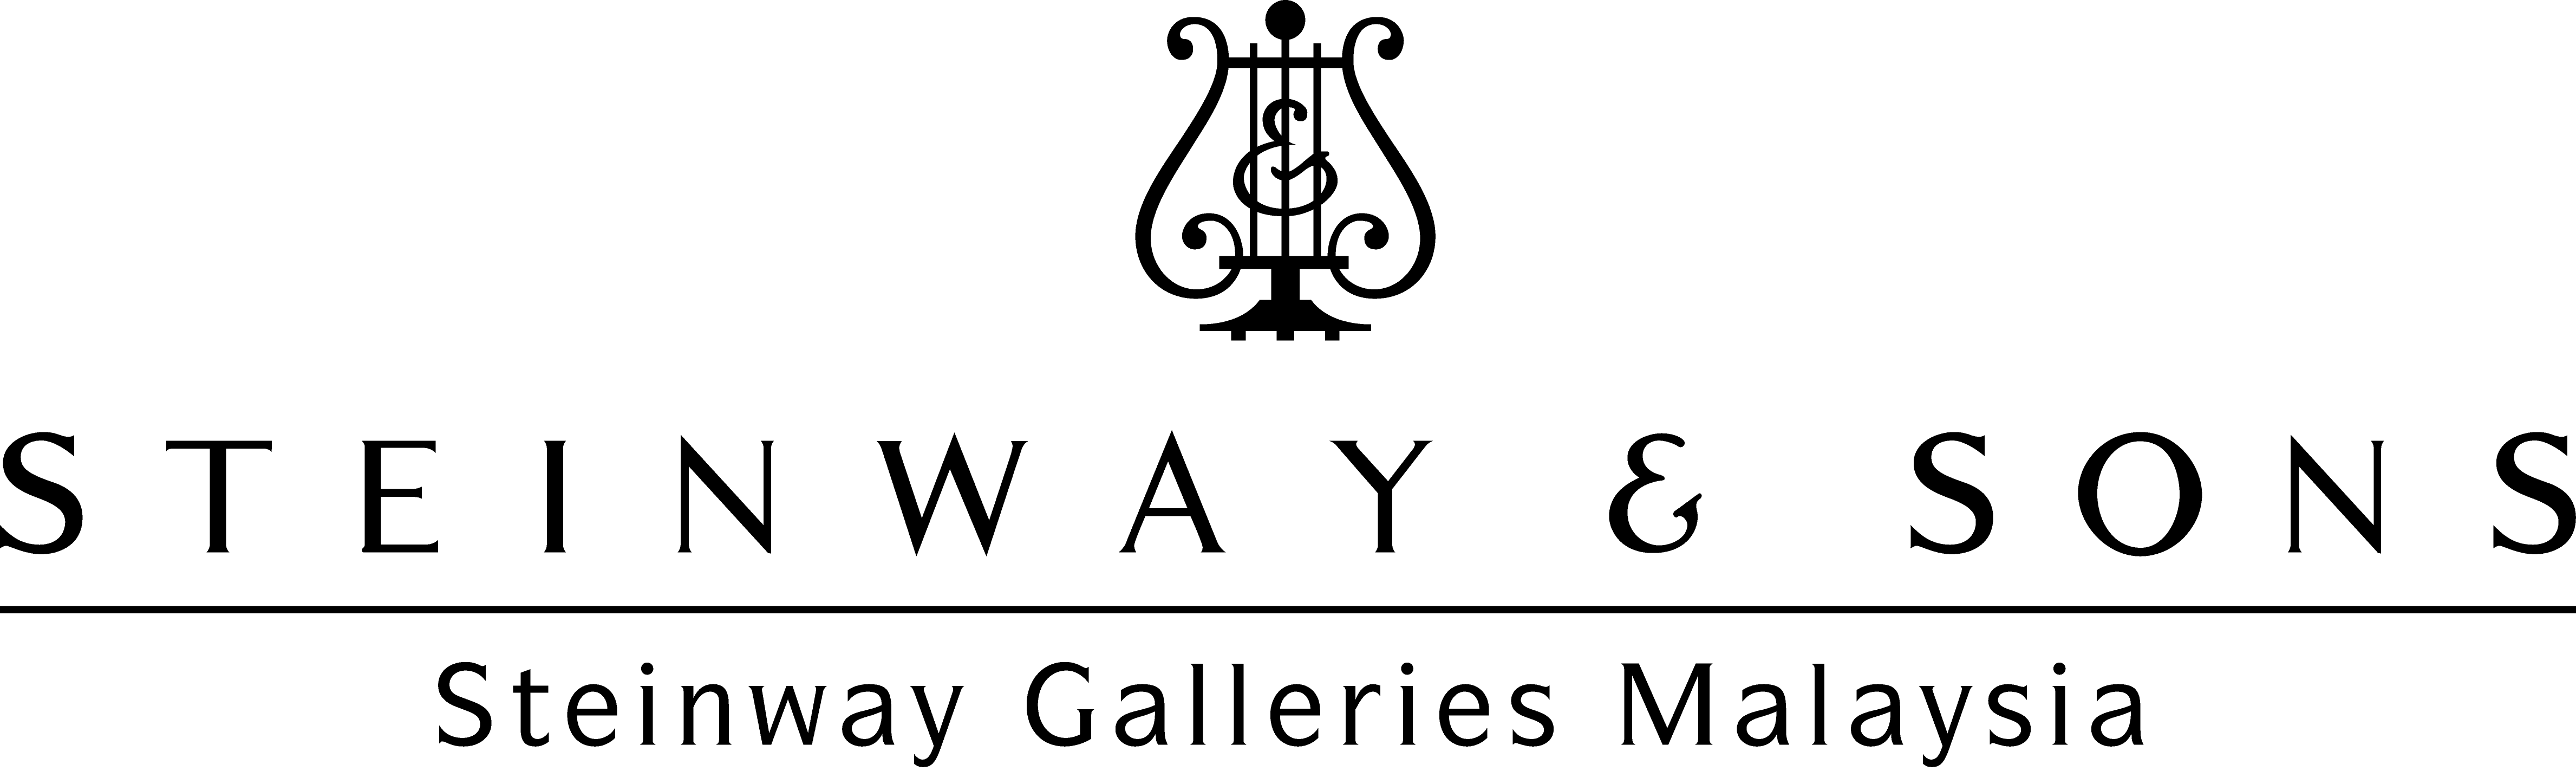 Steinway Galleries malaysia logo black